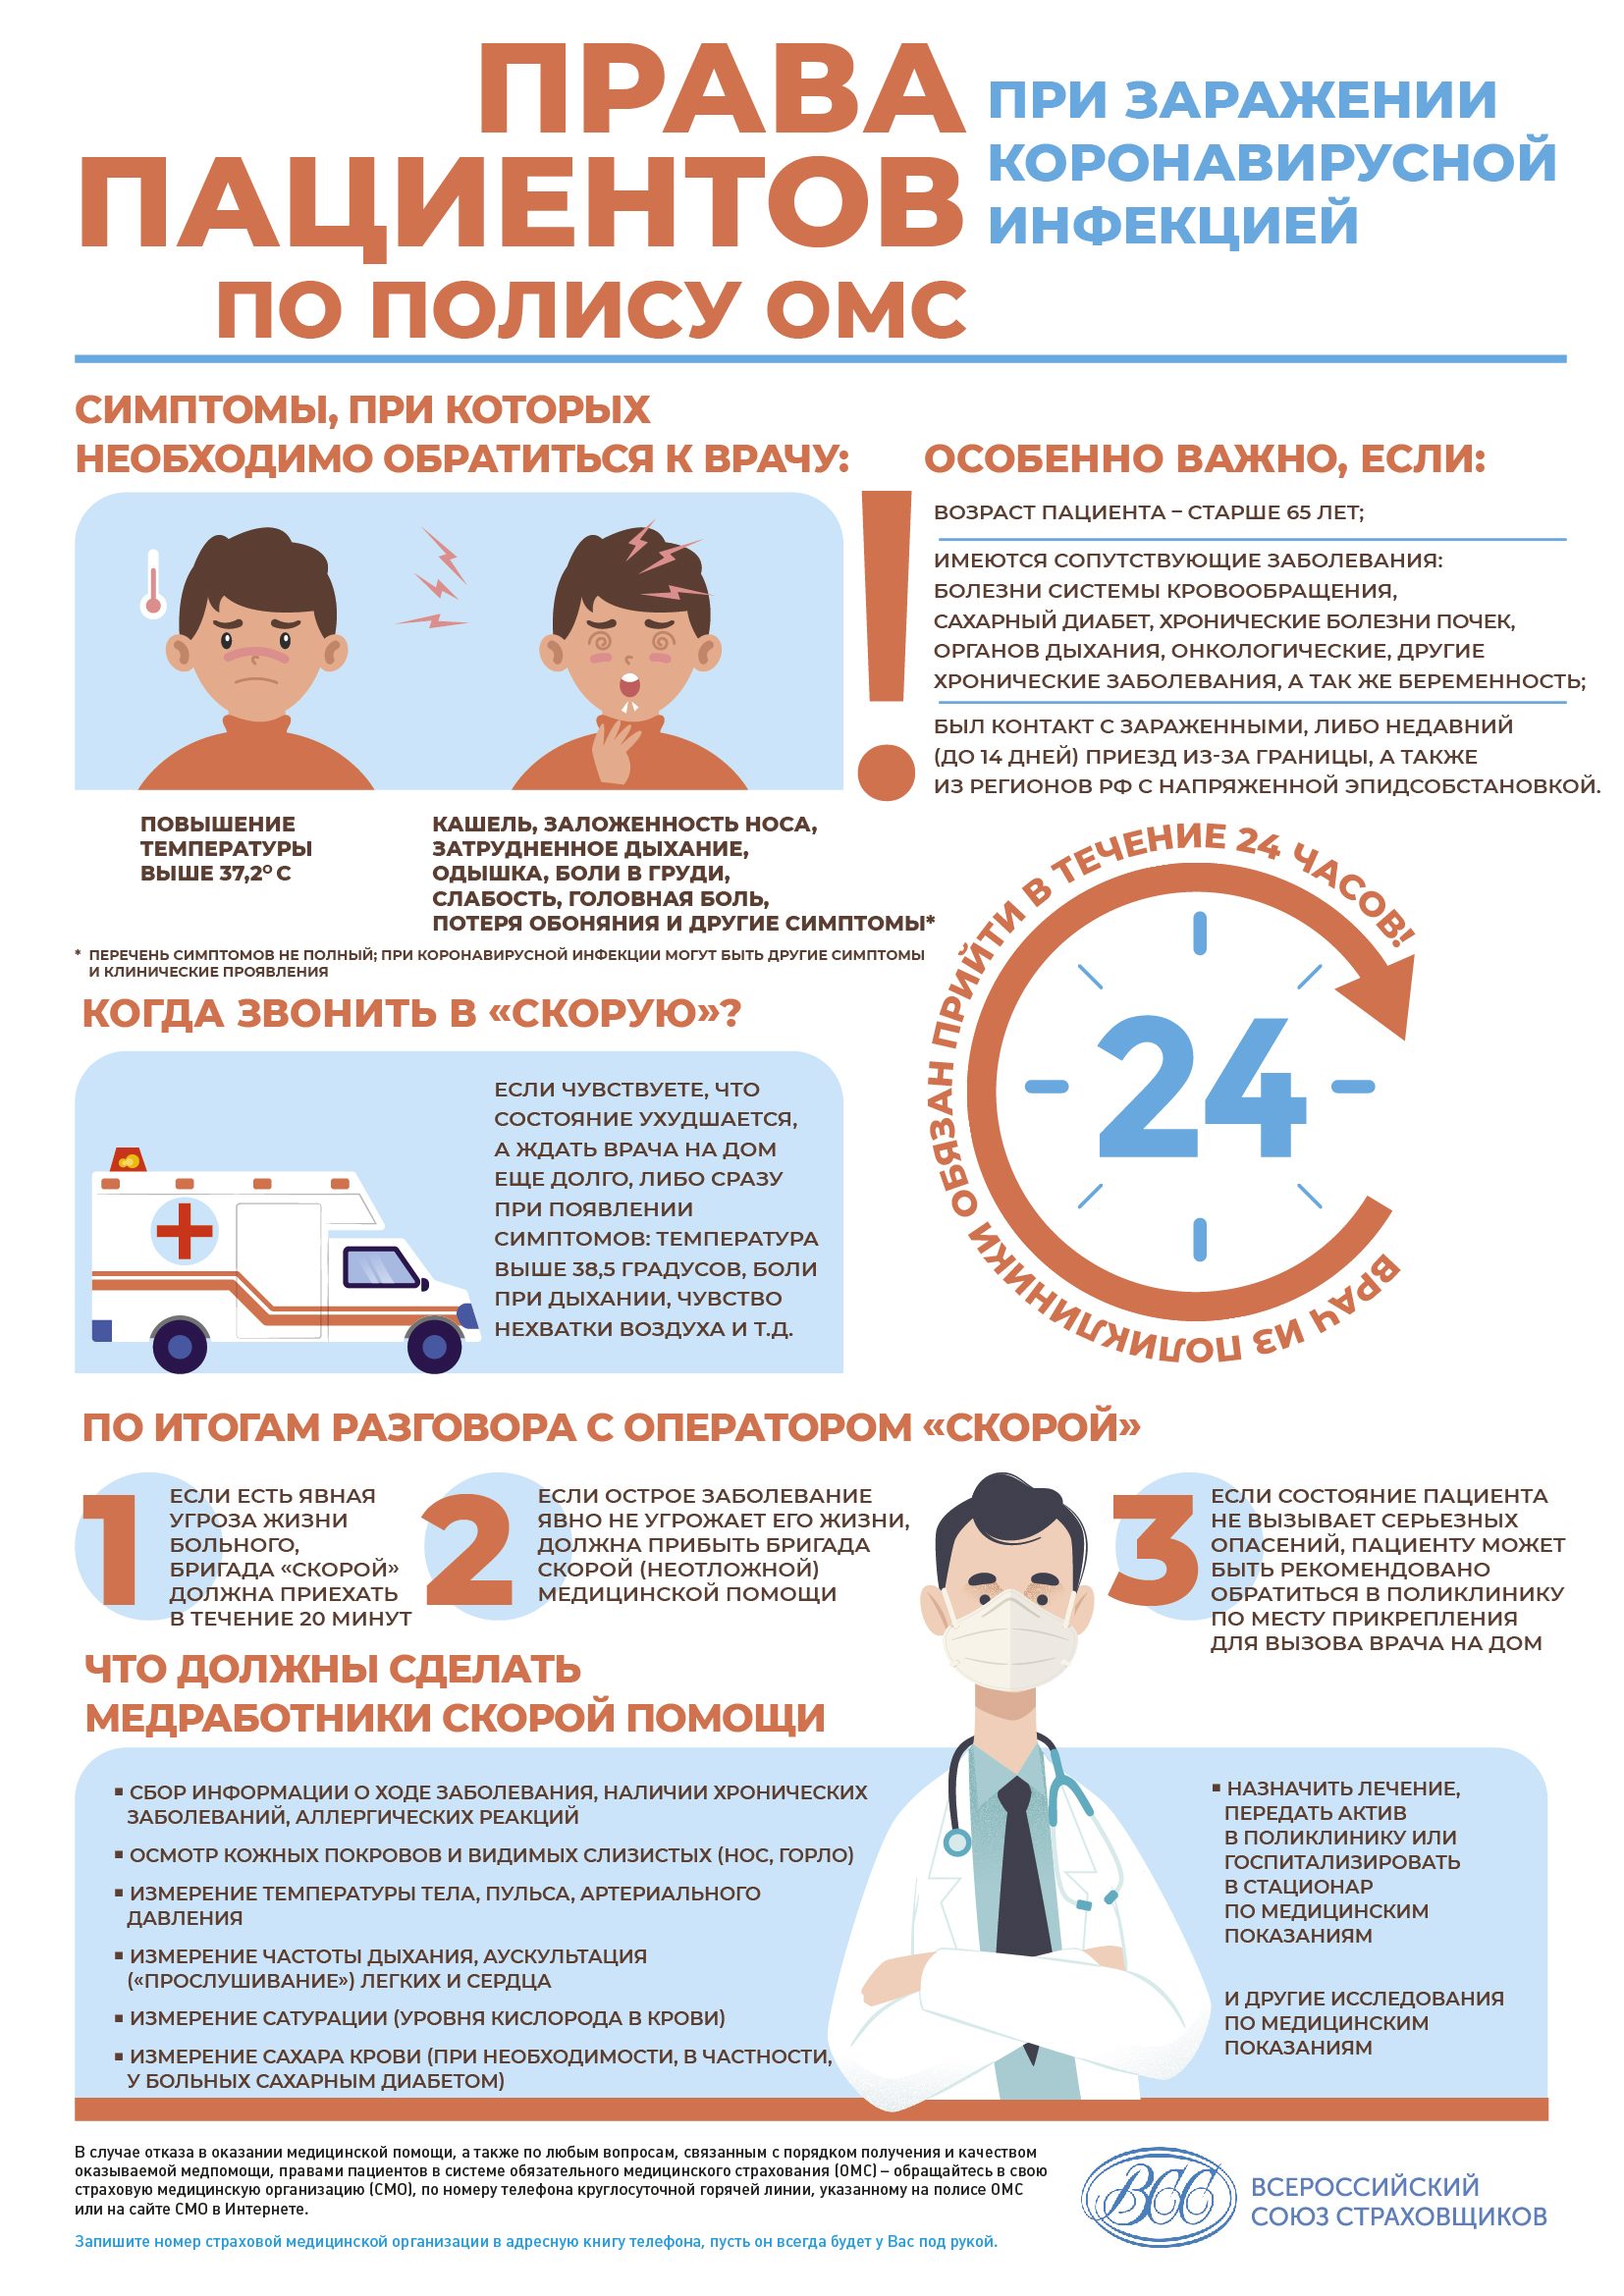 Права пациентов при заражении коронавирусом